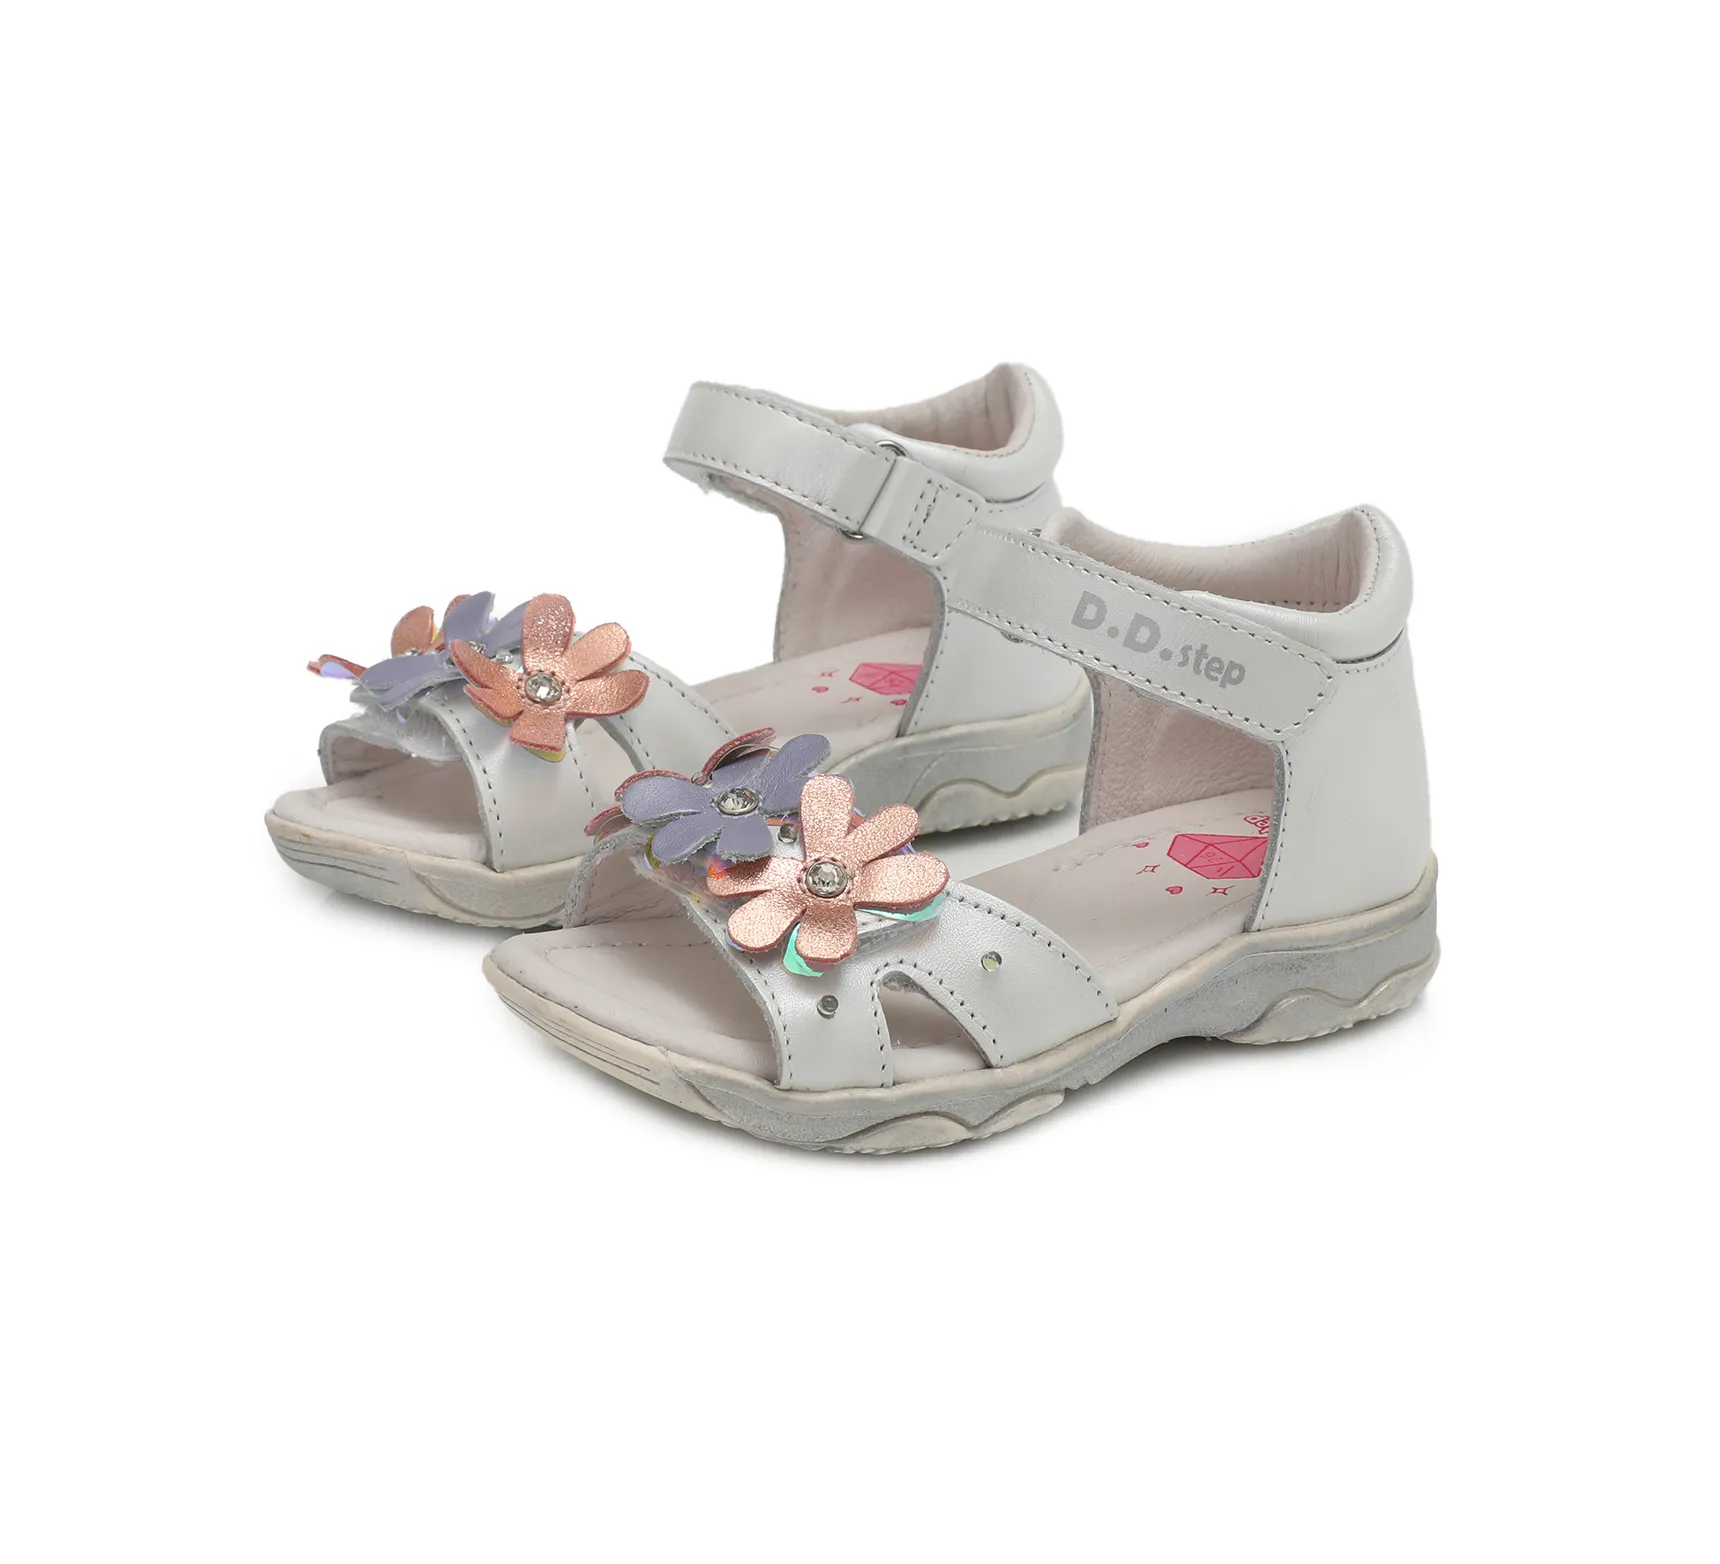 Sandale piele fete, albe cu floricele aplicate si luminite LED, flexibile- D.D.Step [5]